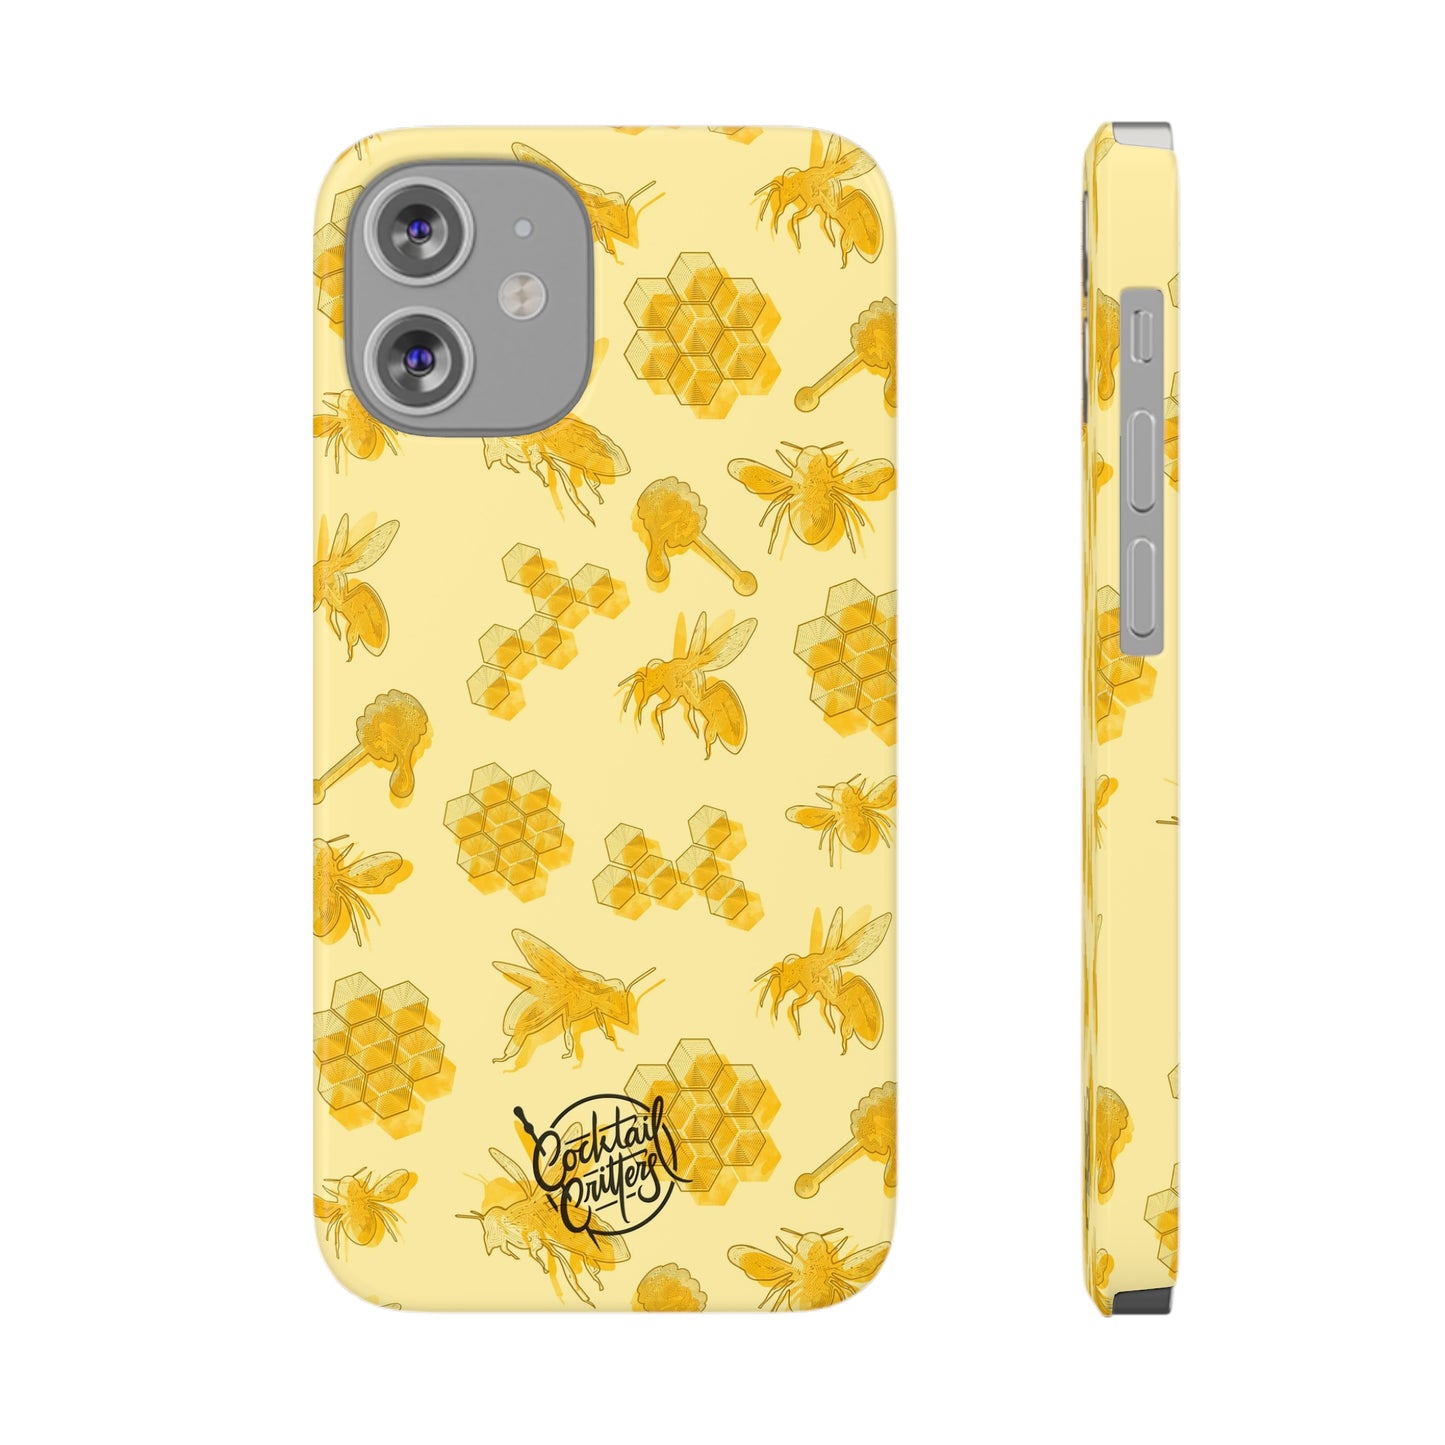 Bumblebee x Penicillin Phone Case